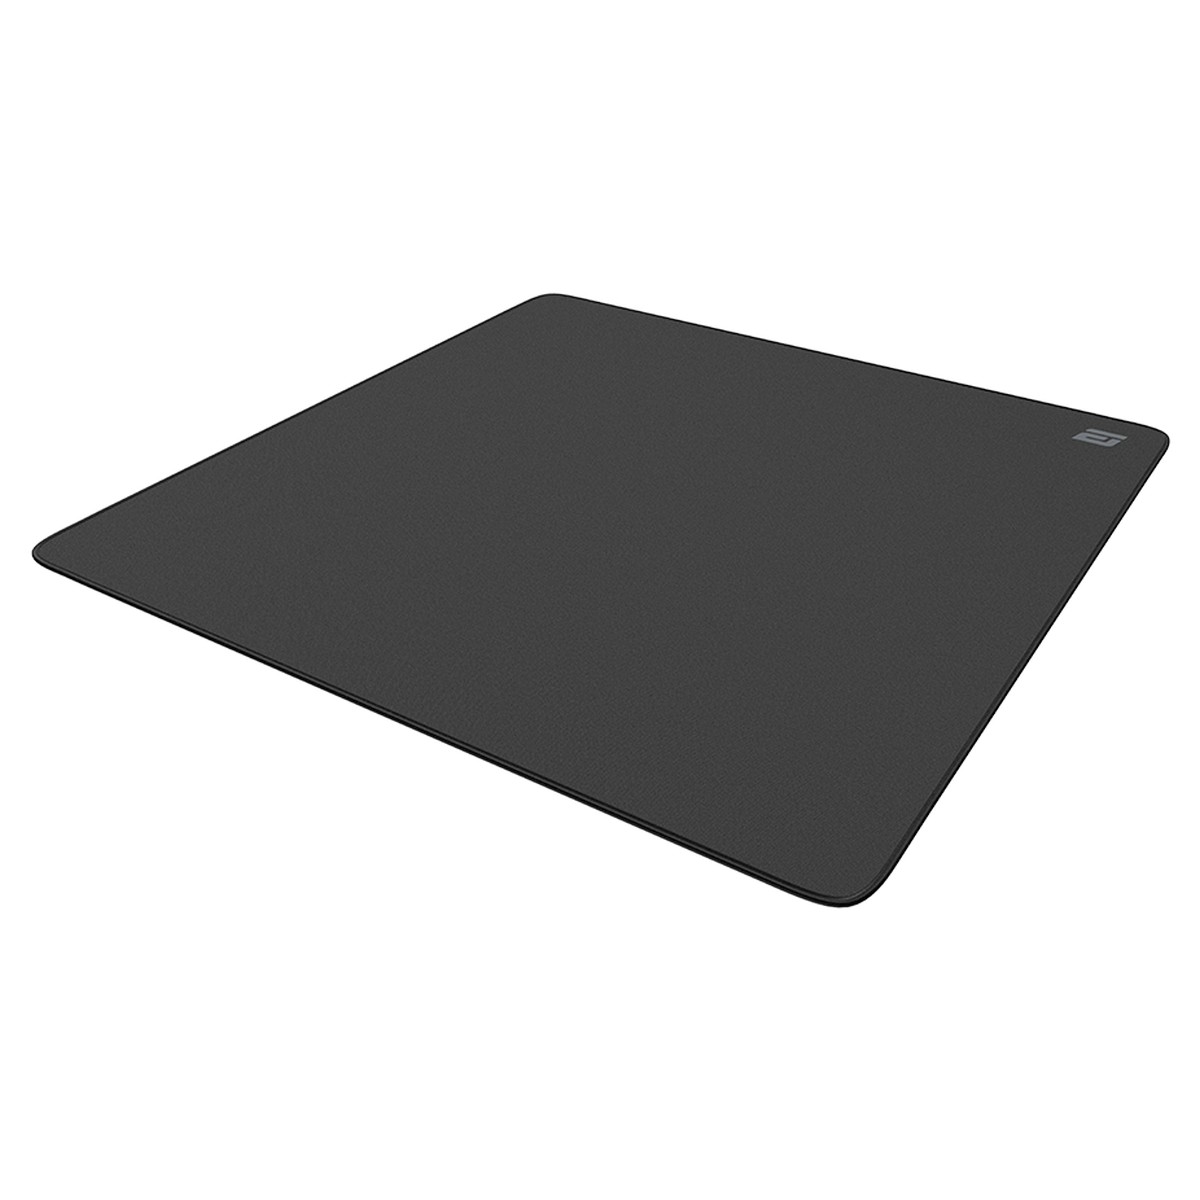 B Grade Endgame Gear EM-C Plus XL Poron Gaming Surface 500x500x3mm (EGG-EMC-500-BLK)